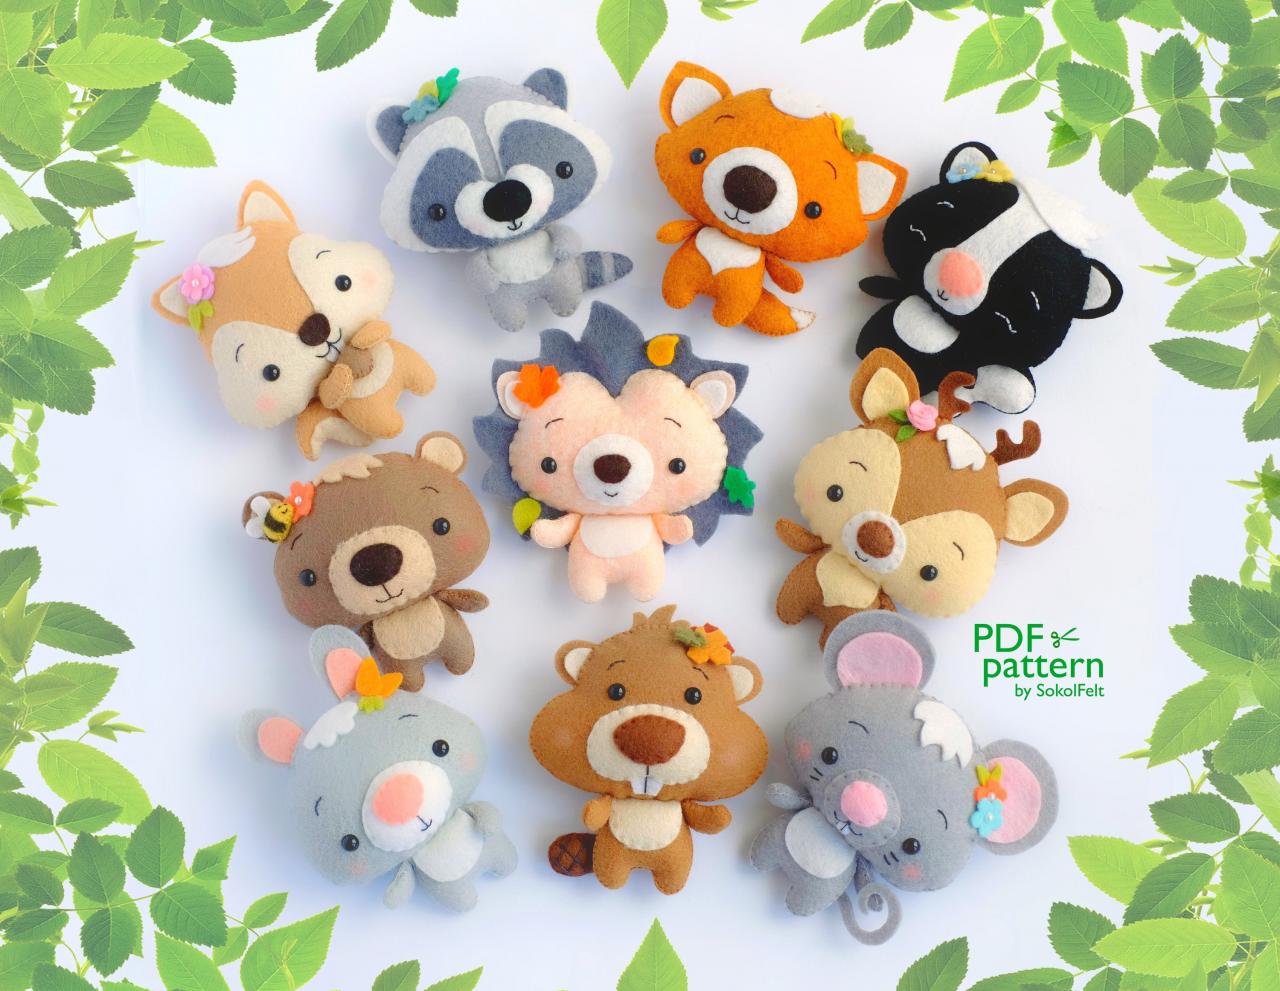 Set of 10 cute woodland animal felt toy sewing PDF and SVG patterns, Squirrel, Raccoon, Fox, Skunk, Bear, Hedgehog, Deer, Rabbit, Beaver